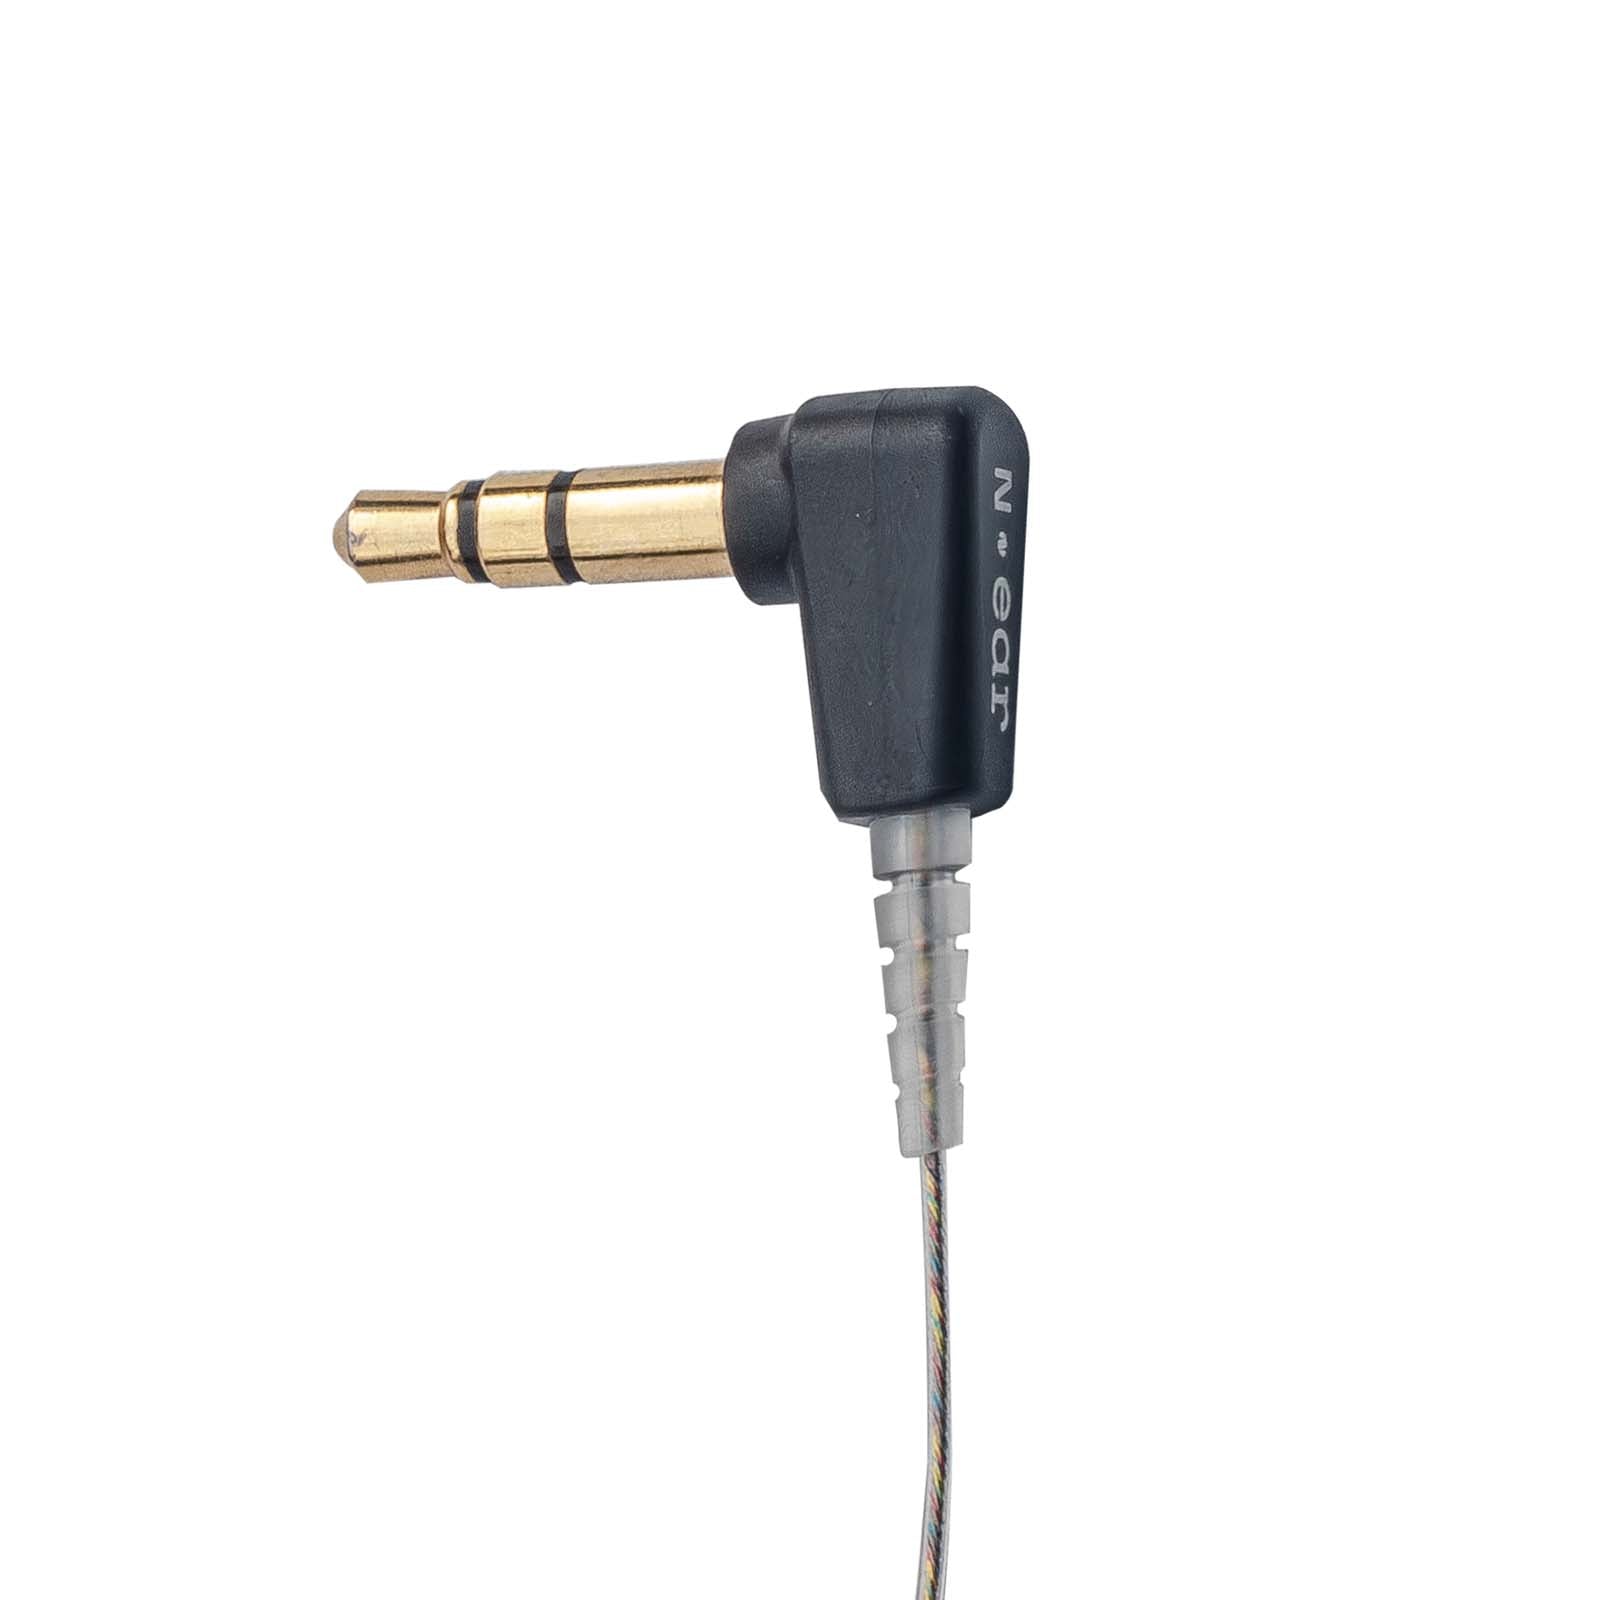 N-ear: 360™ Original 2-Wire Surveillance Kit